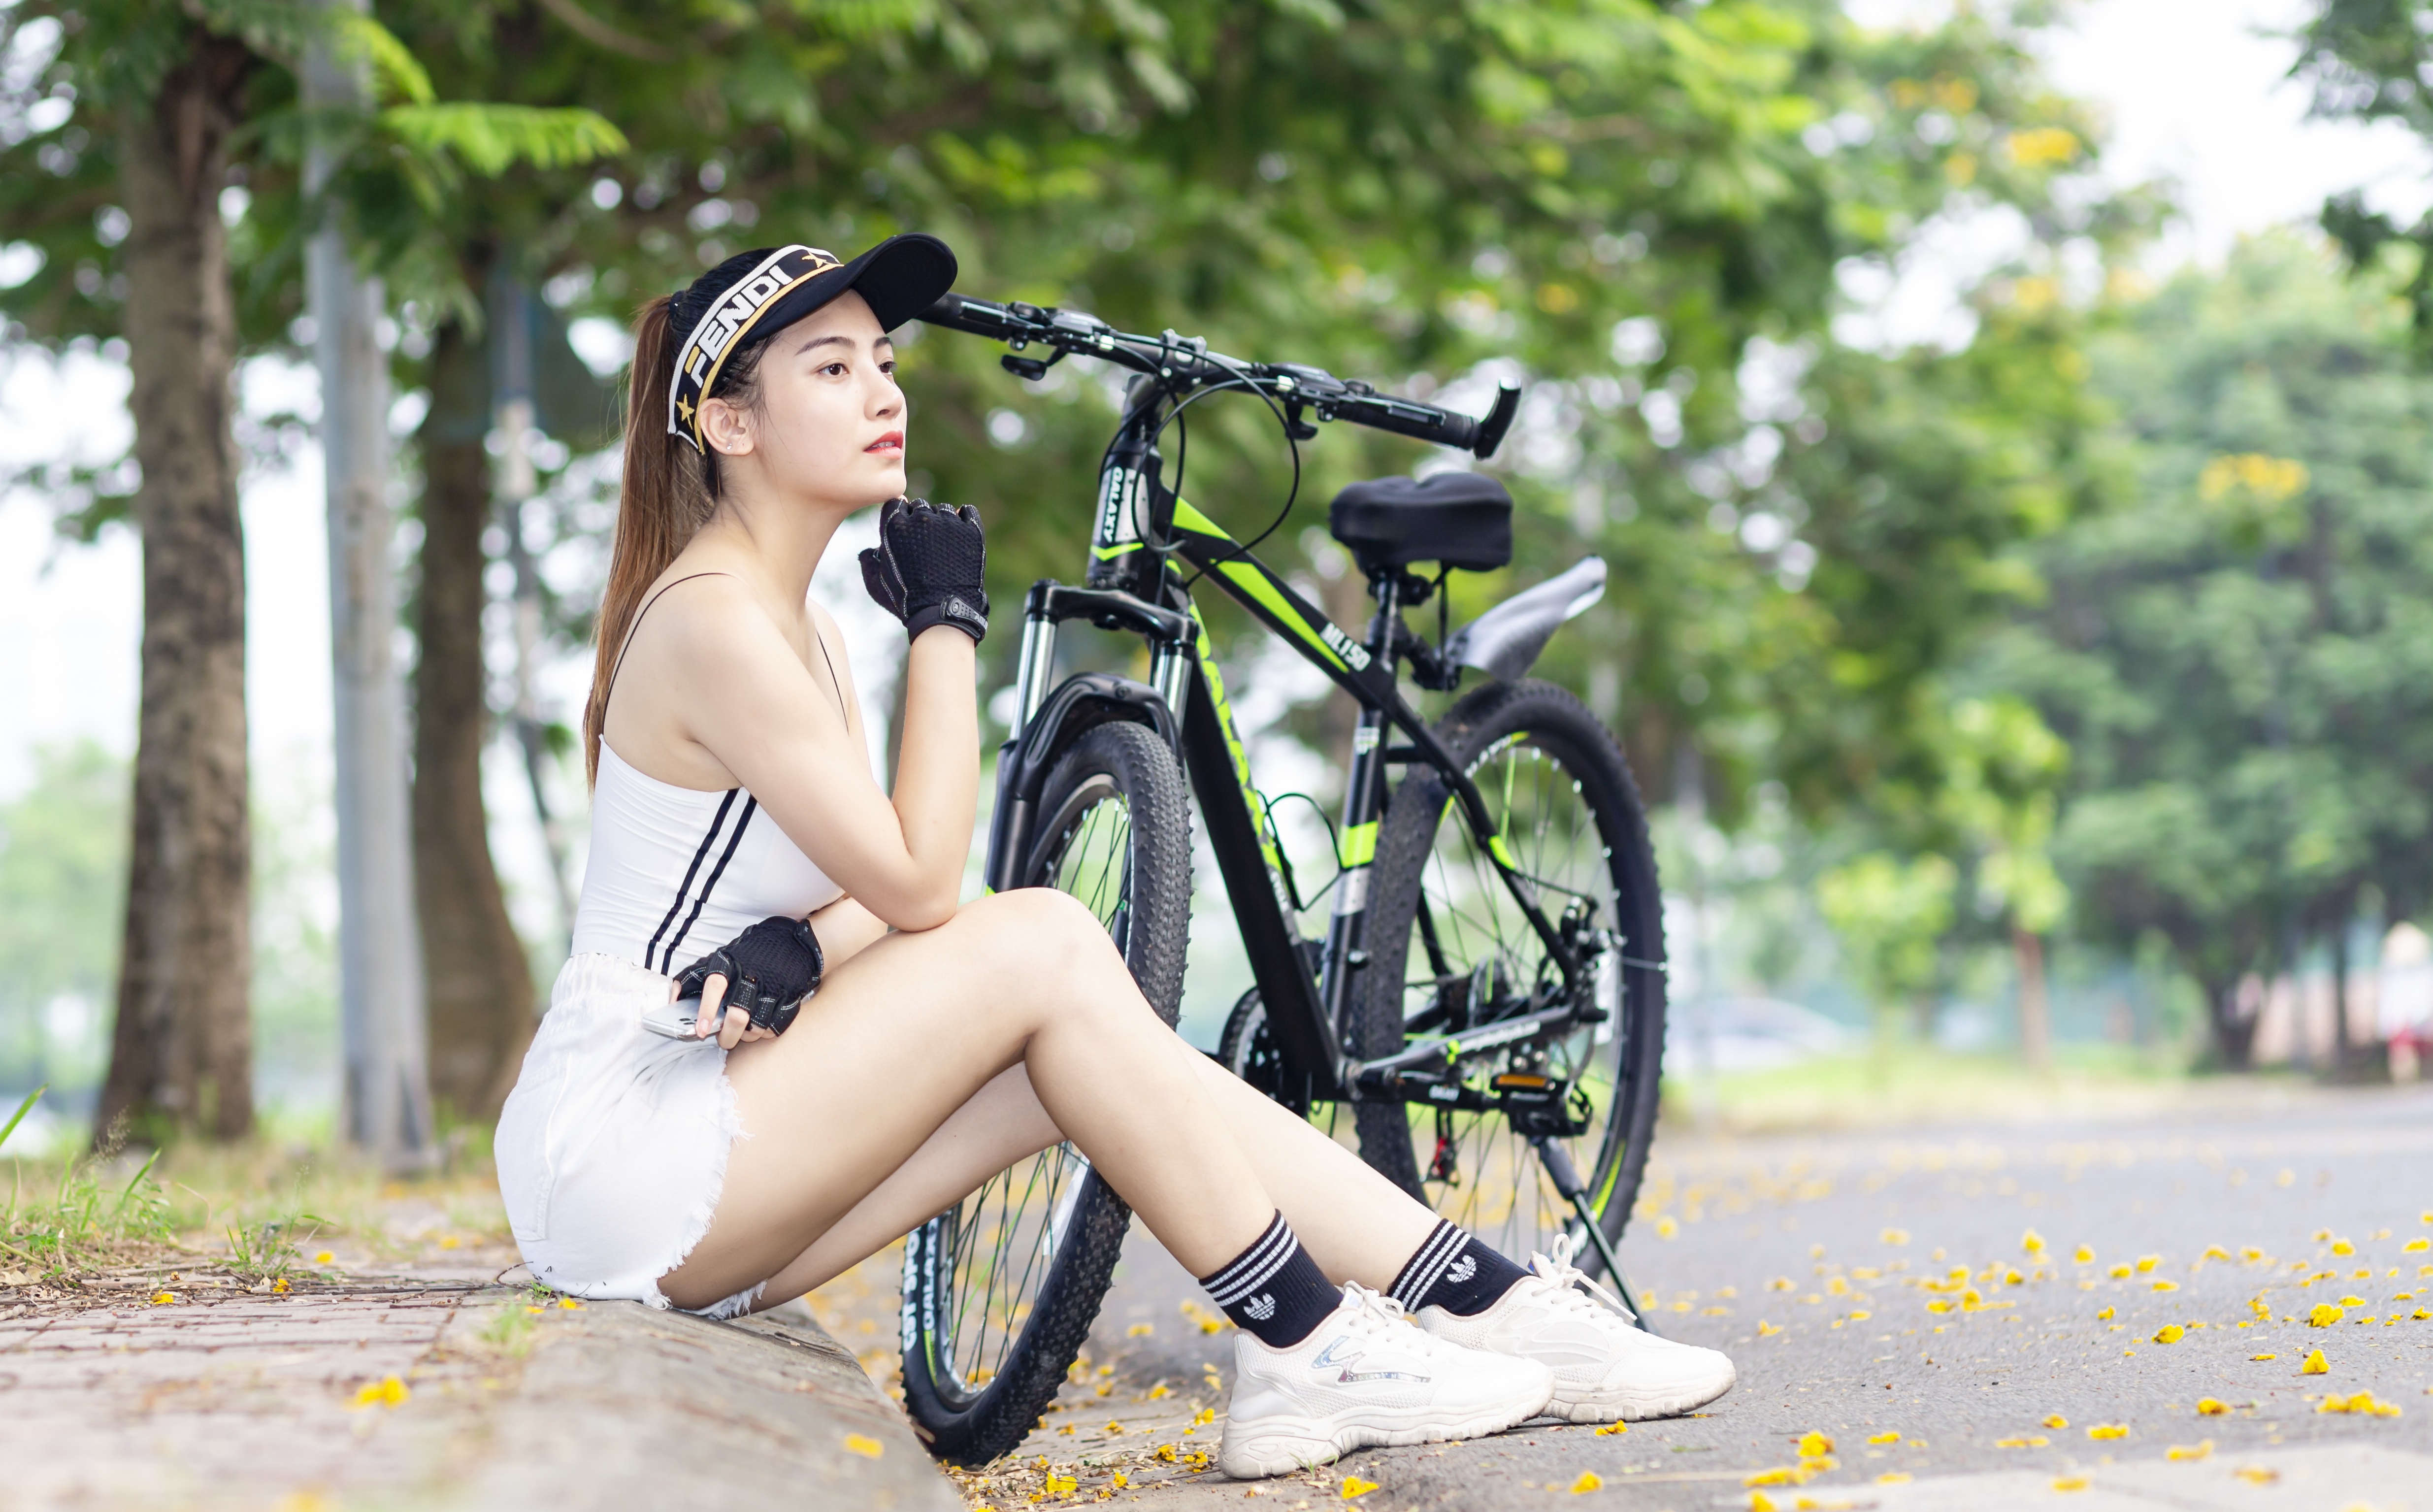 Asian Model Women Long Hair Dark Hair Depth Of Field Sneakers Shorts Bicycle Trees Ponytail Gloves S 4940x3070